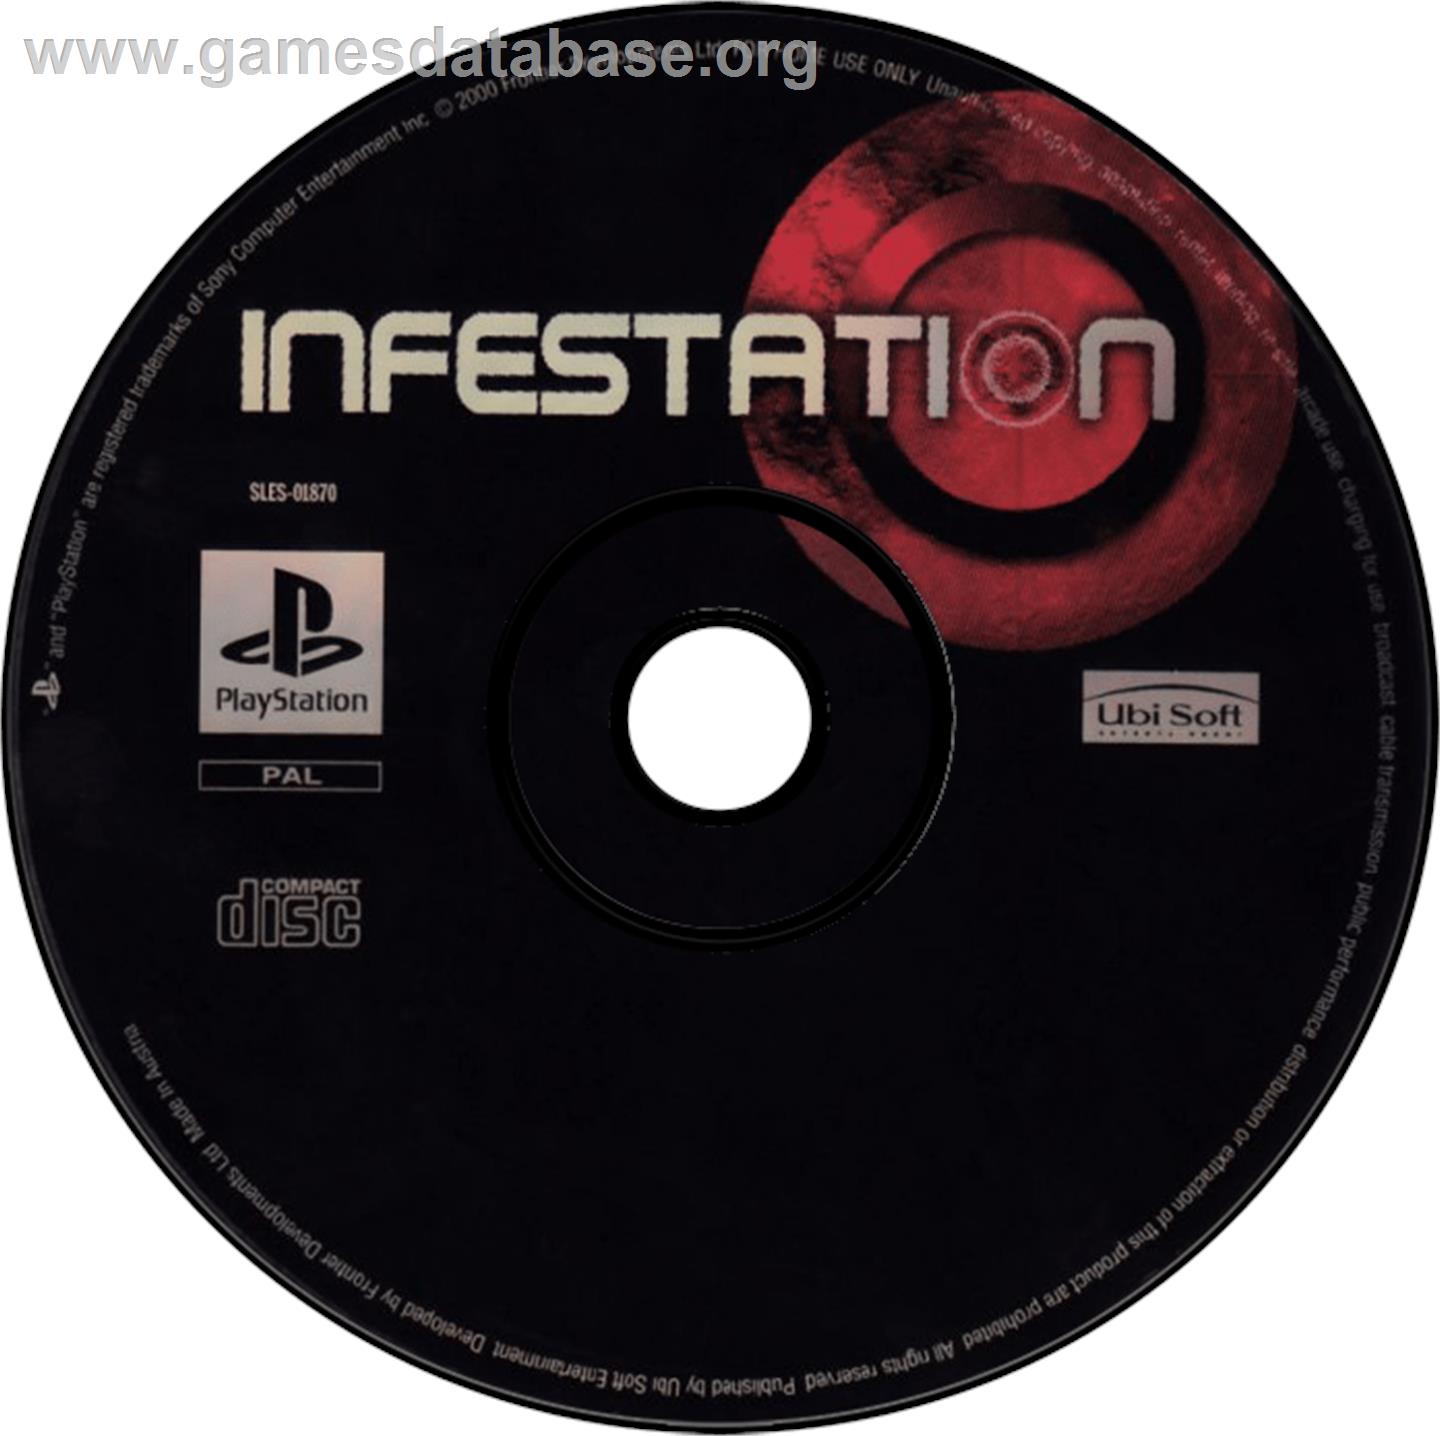 Infestation - Sony Playstation - Artwork - Disc